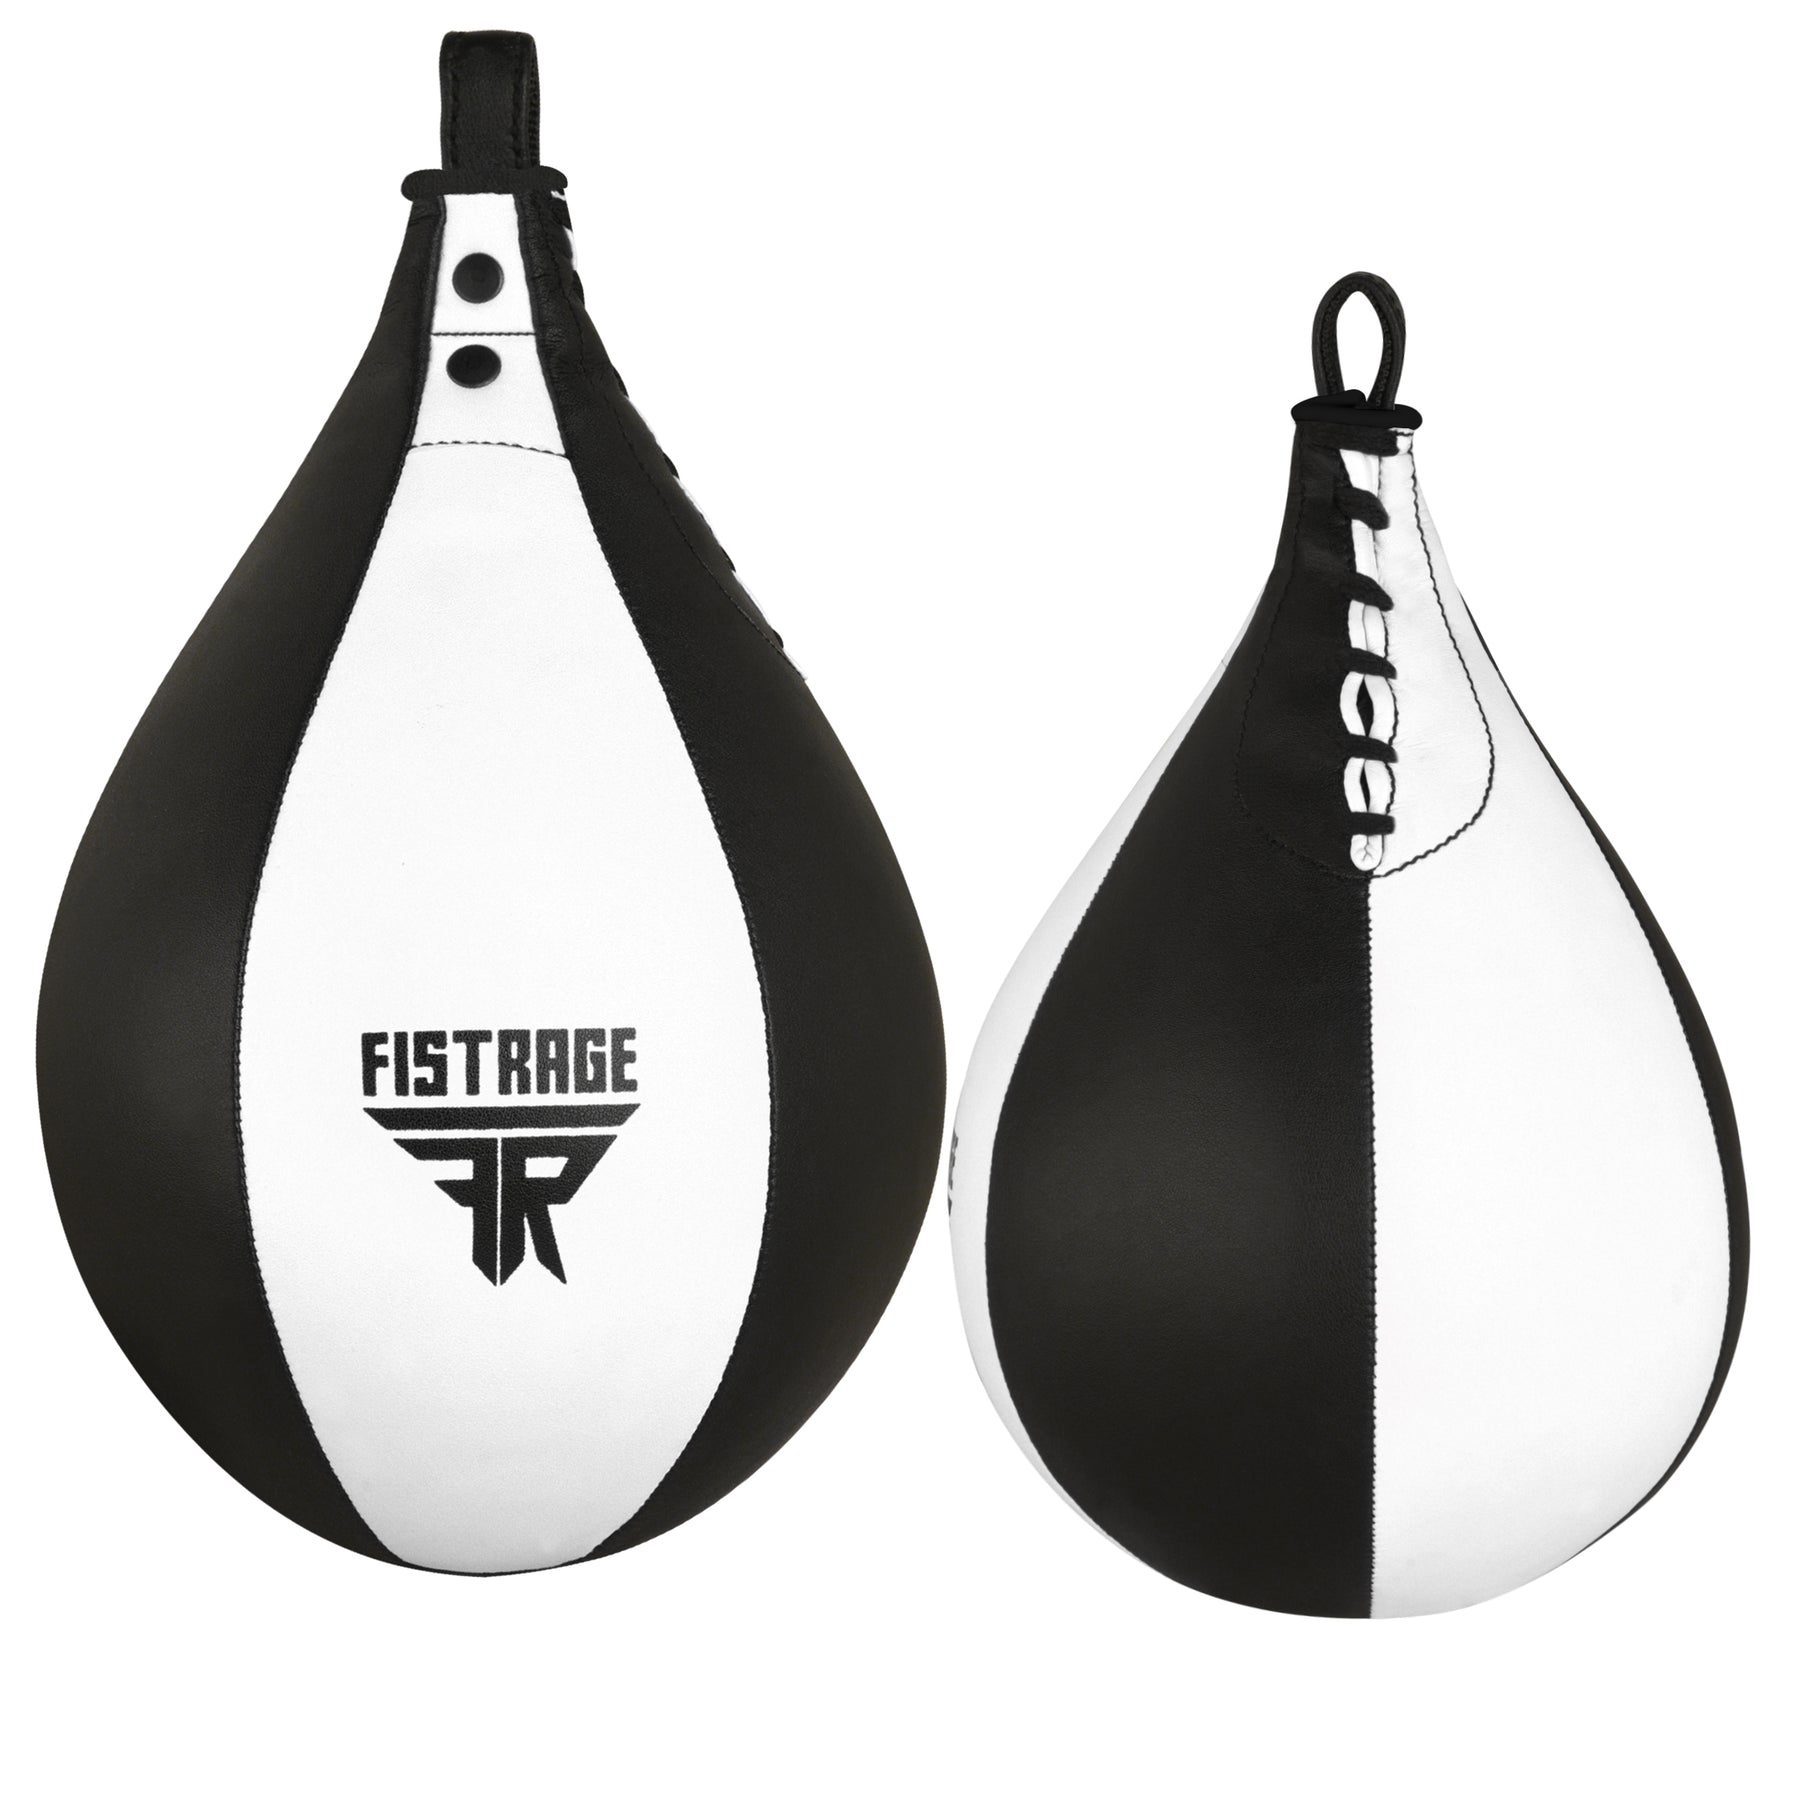 FISTRAGE Speed Bag with free Hanging Swivel - White Black